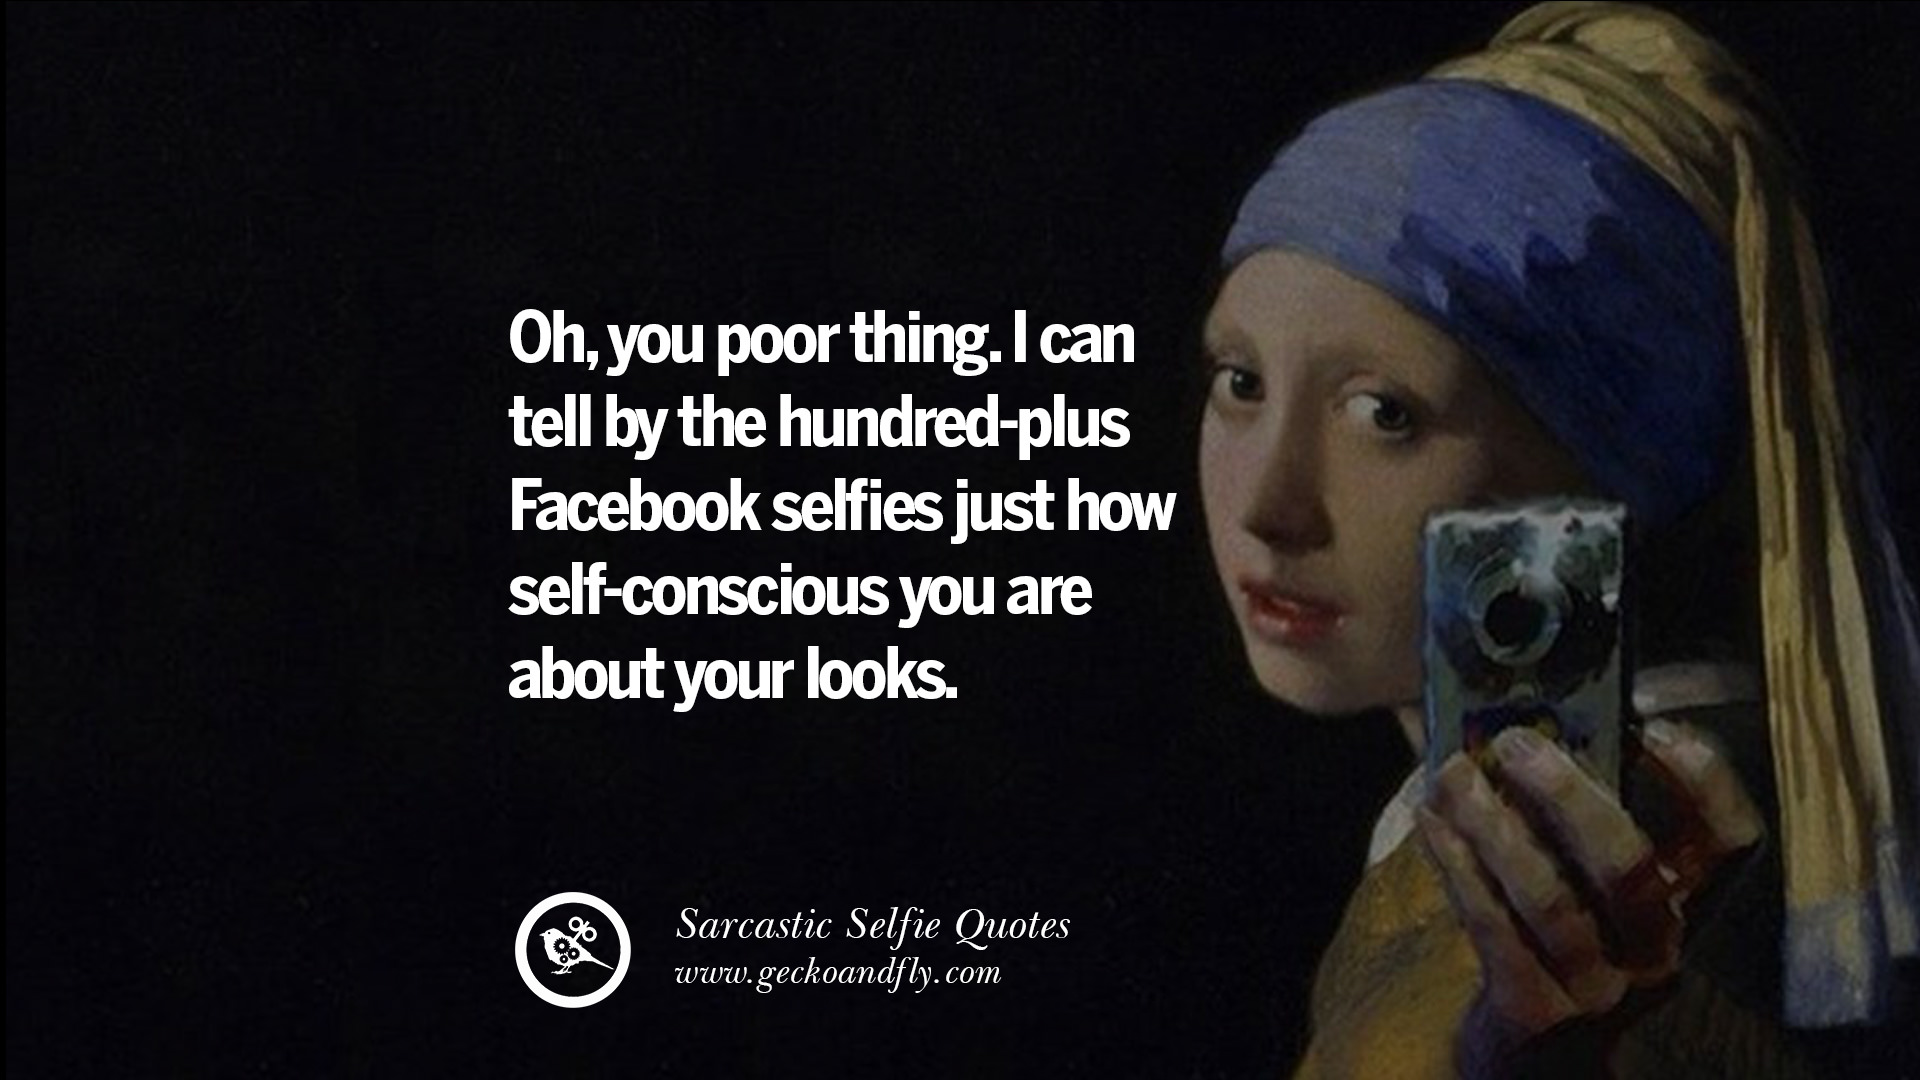 Too many selfies on facebook